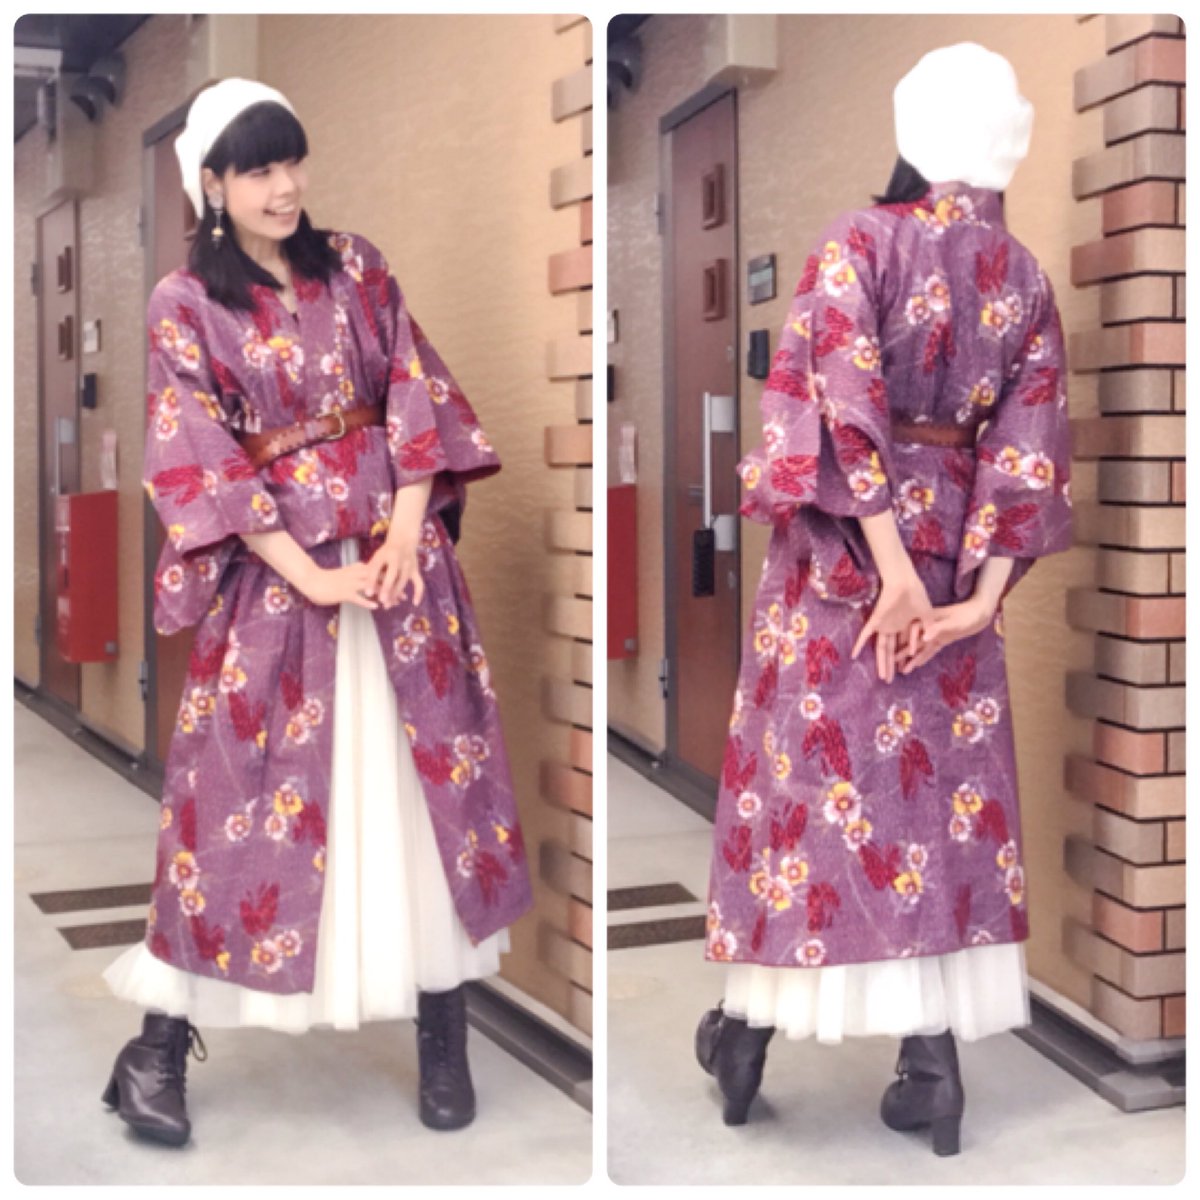 Kaeri Fm五條 和洋折衷コーディネーター در توییتر 5月3日のコーデ 今日はガーリーに ヽ やっぱチェックはかわええな ワンピース風に着てみた 楽ちんだわ 令和装 着物女子 普段着物 和洋折衷コーデヰネヱト 着物コーディネート Kimono 和洋折衷